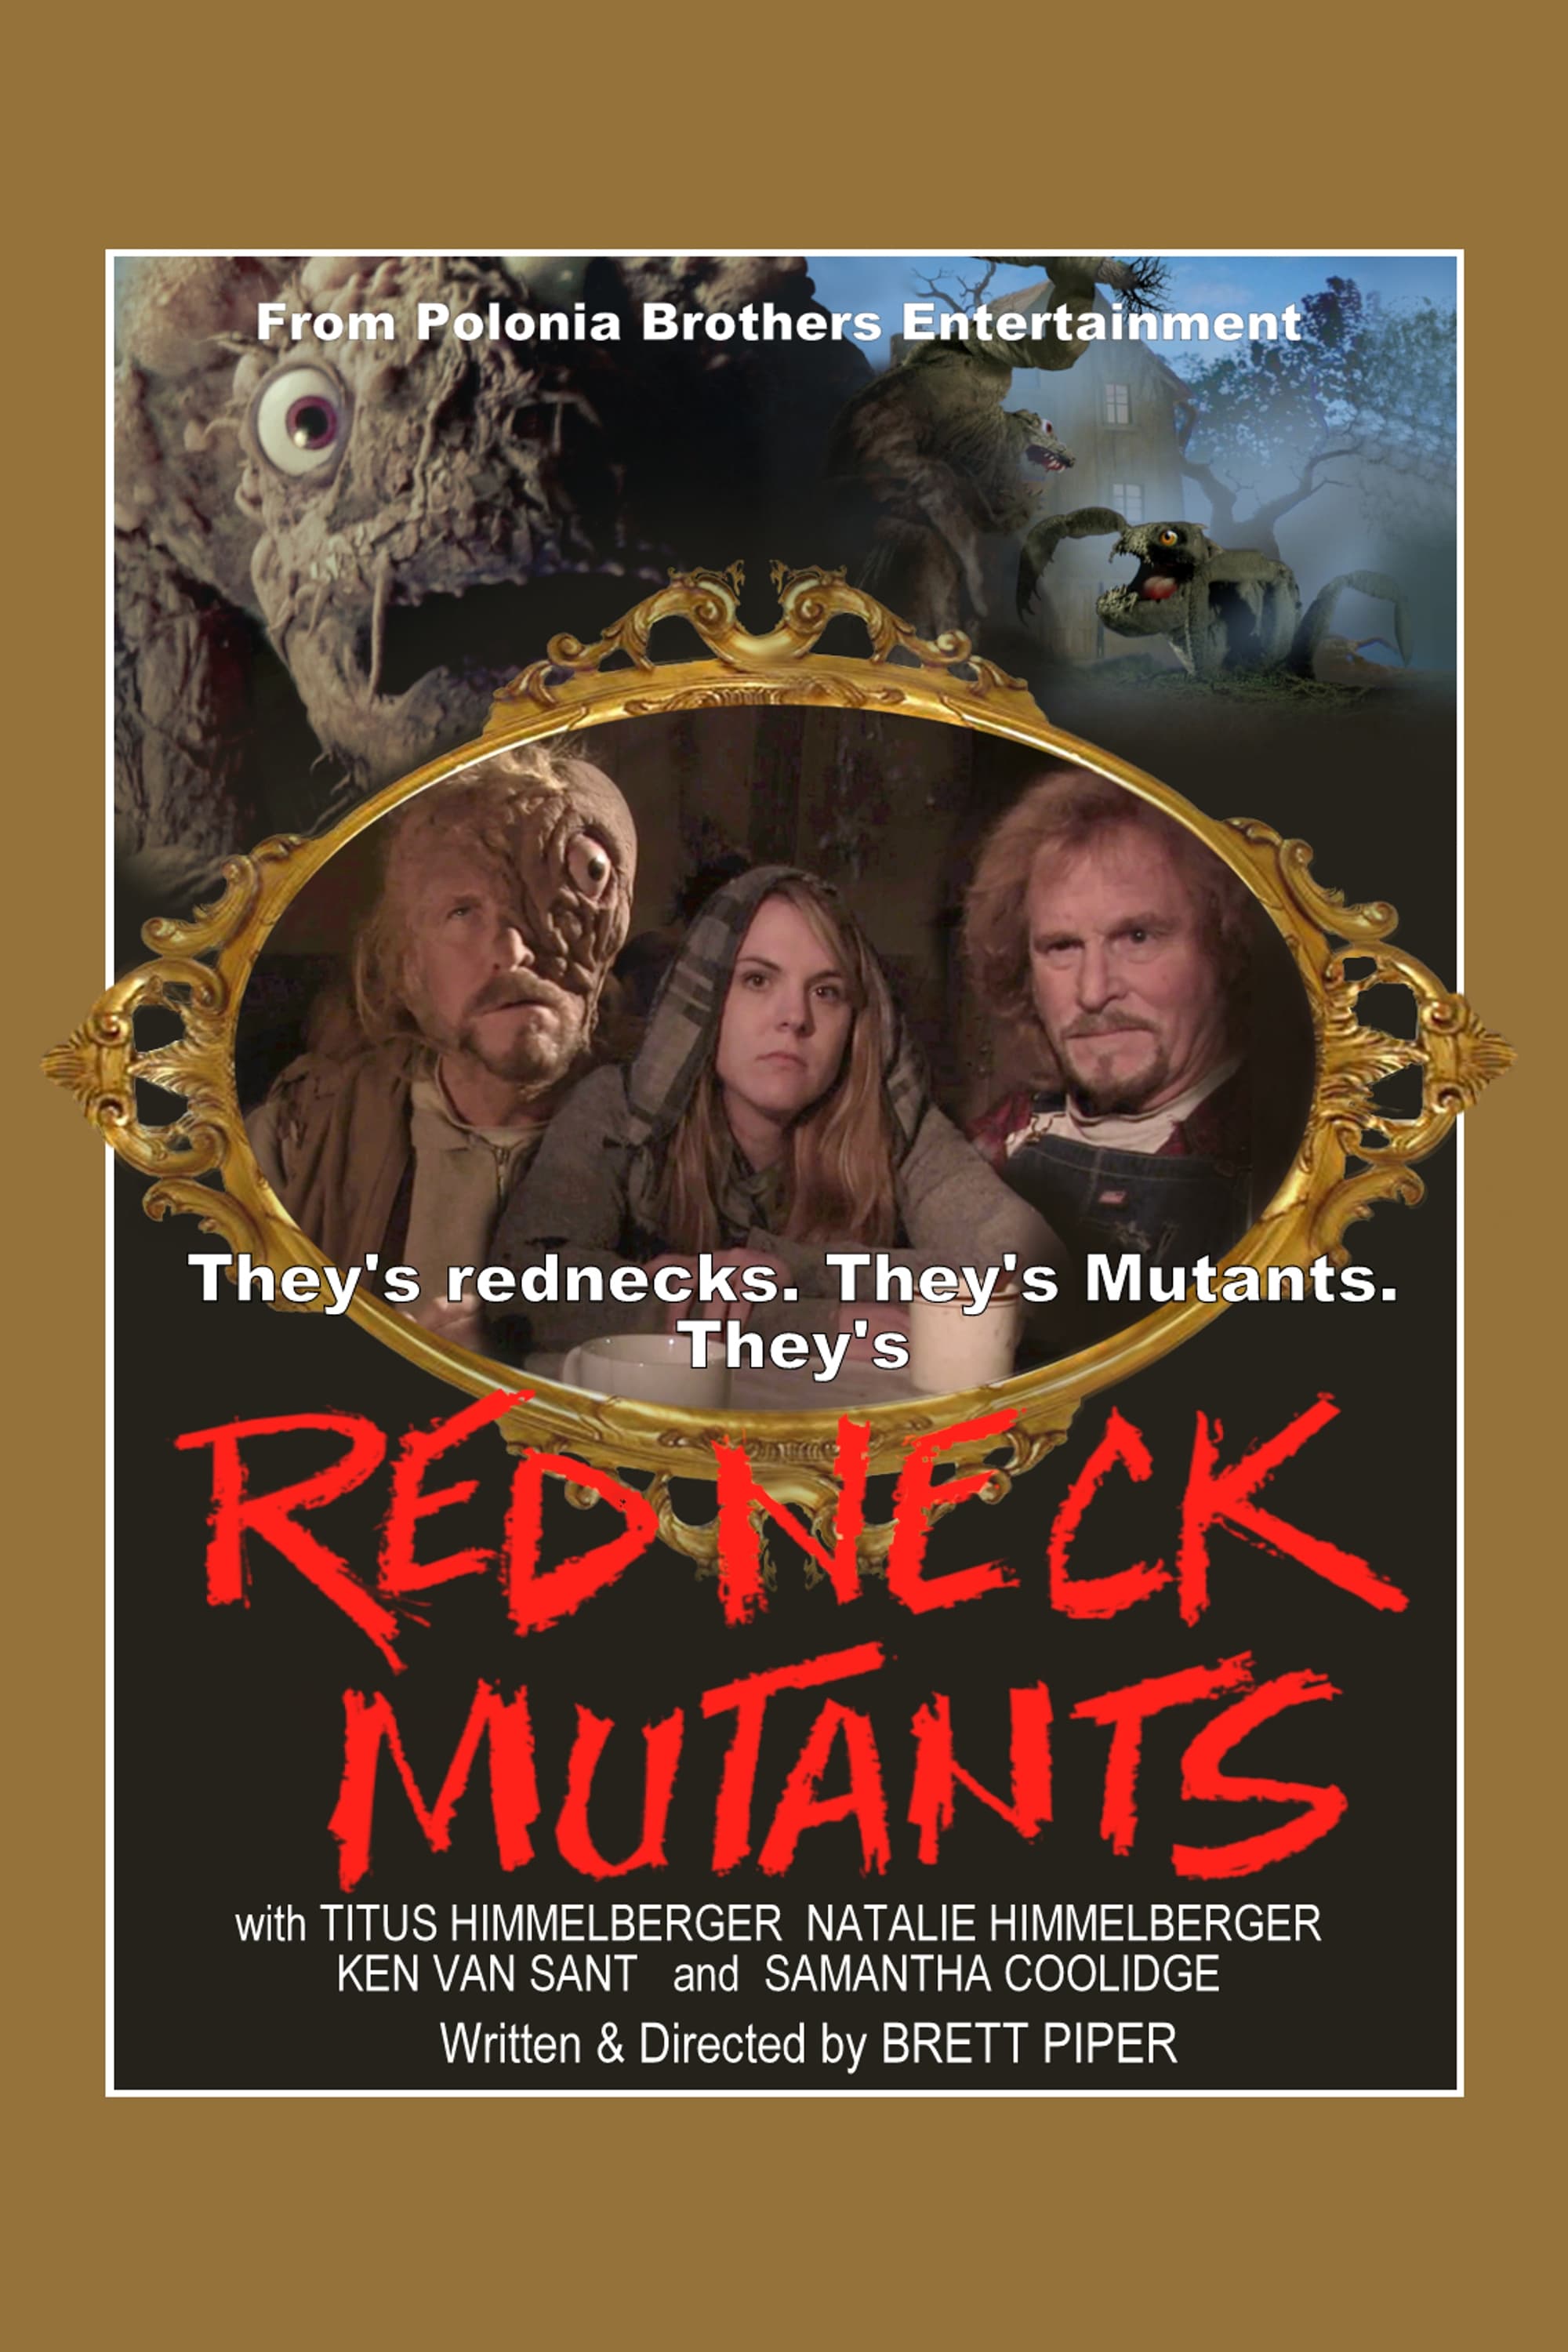 Redneck Mutants